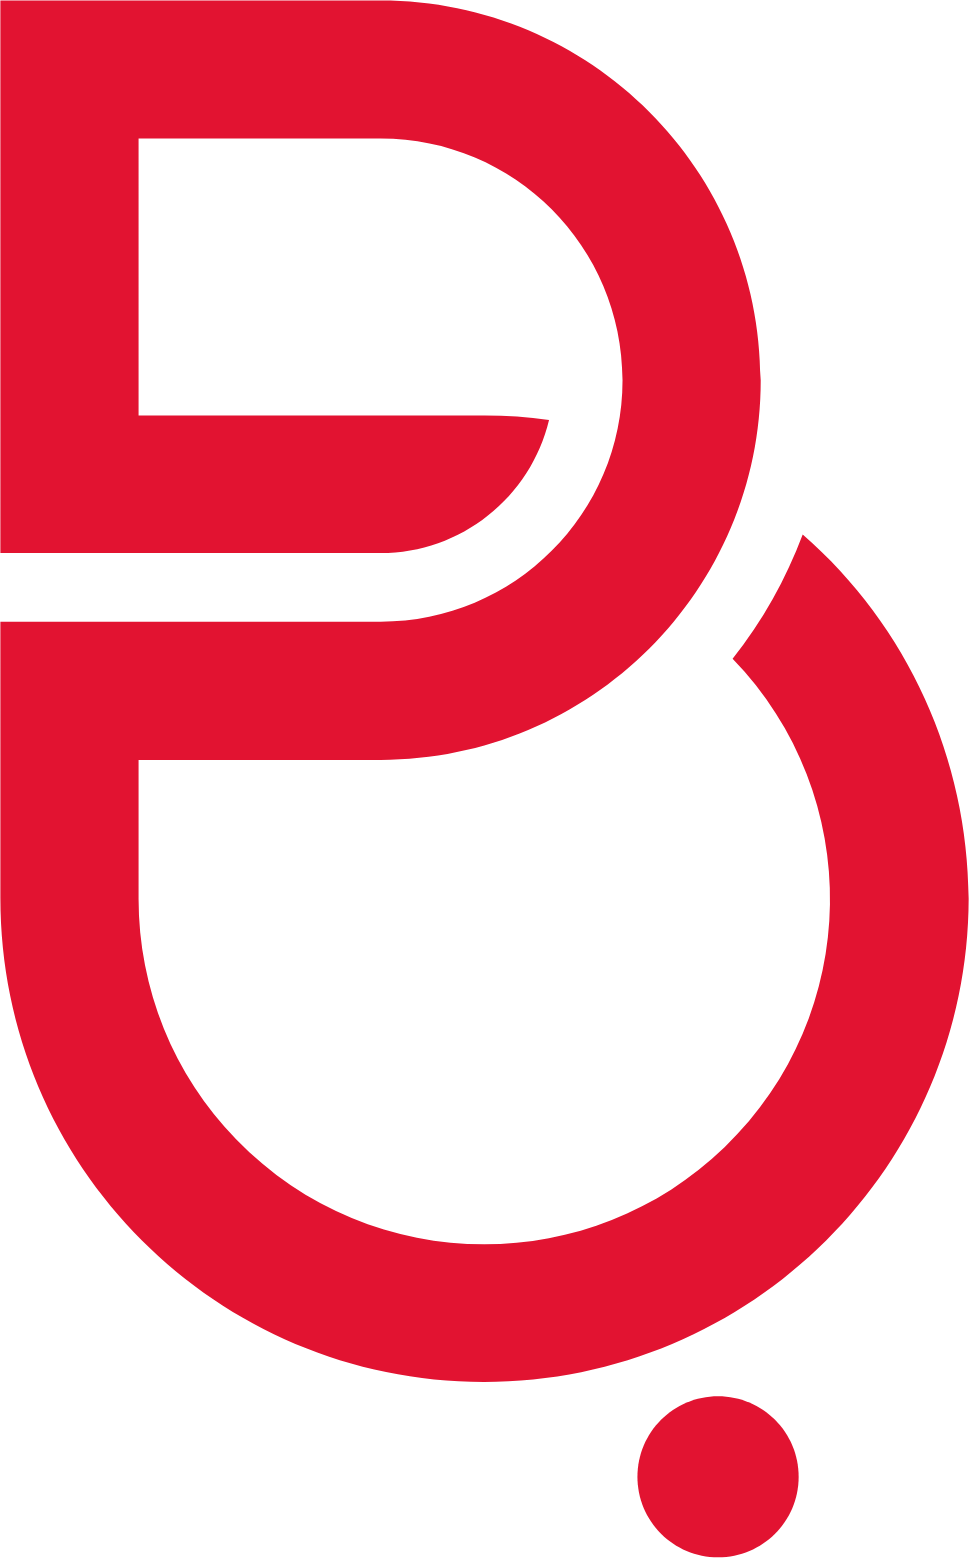 Batelco (Bahrain Telecommunication Company) logo (transparent PNG)